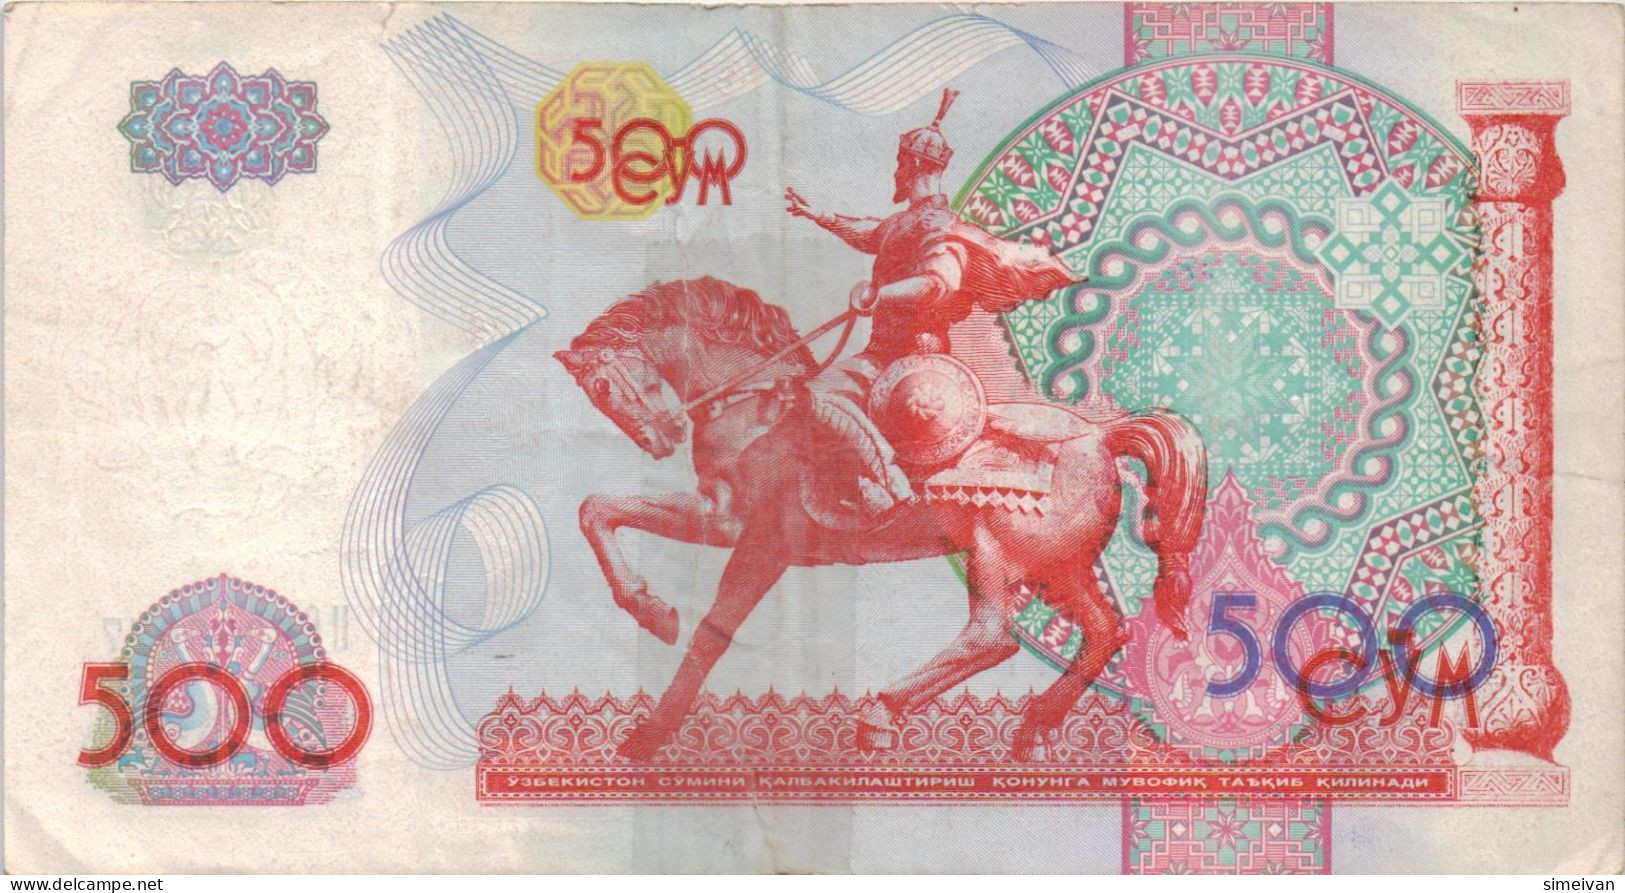 Uzbekistan 500 Sum 1999 P-81 Banknote Asia Currency Ouzbékistan Usbekistan #5338 - Oezbekistan